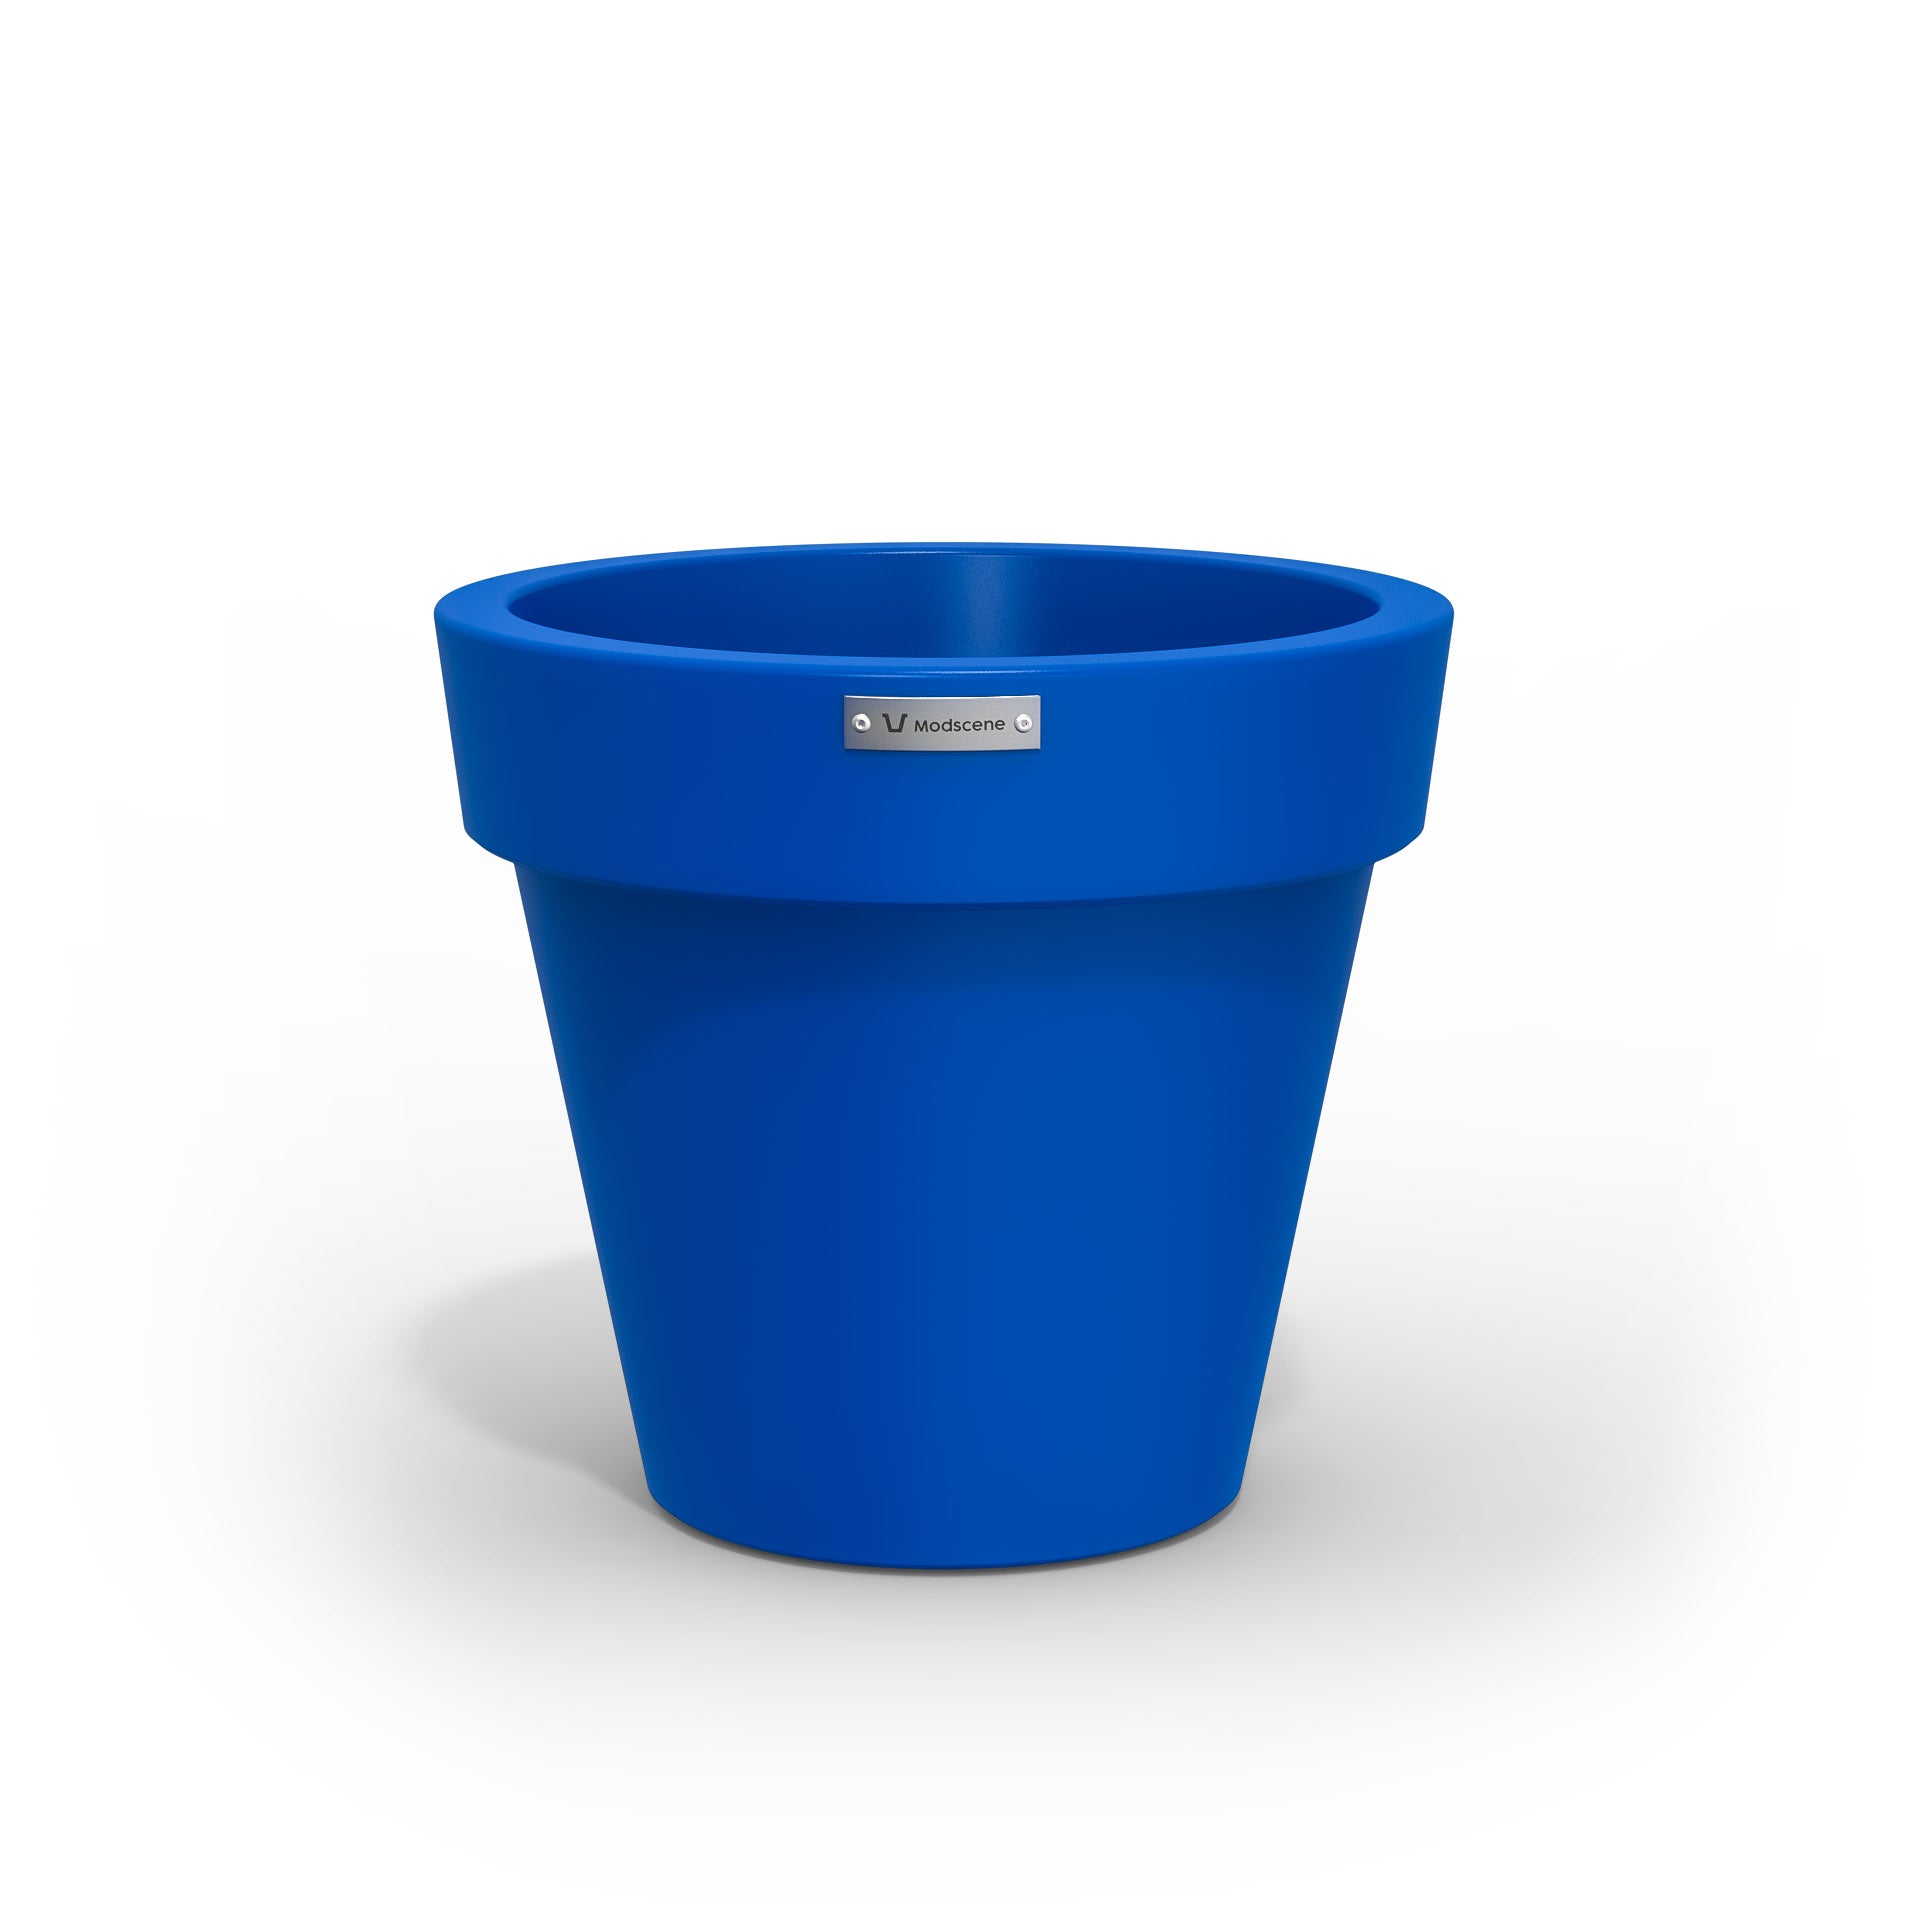 Small Modscene plastic planter pot in a dark blue colour. New Zealand made.